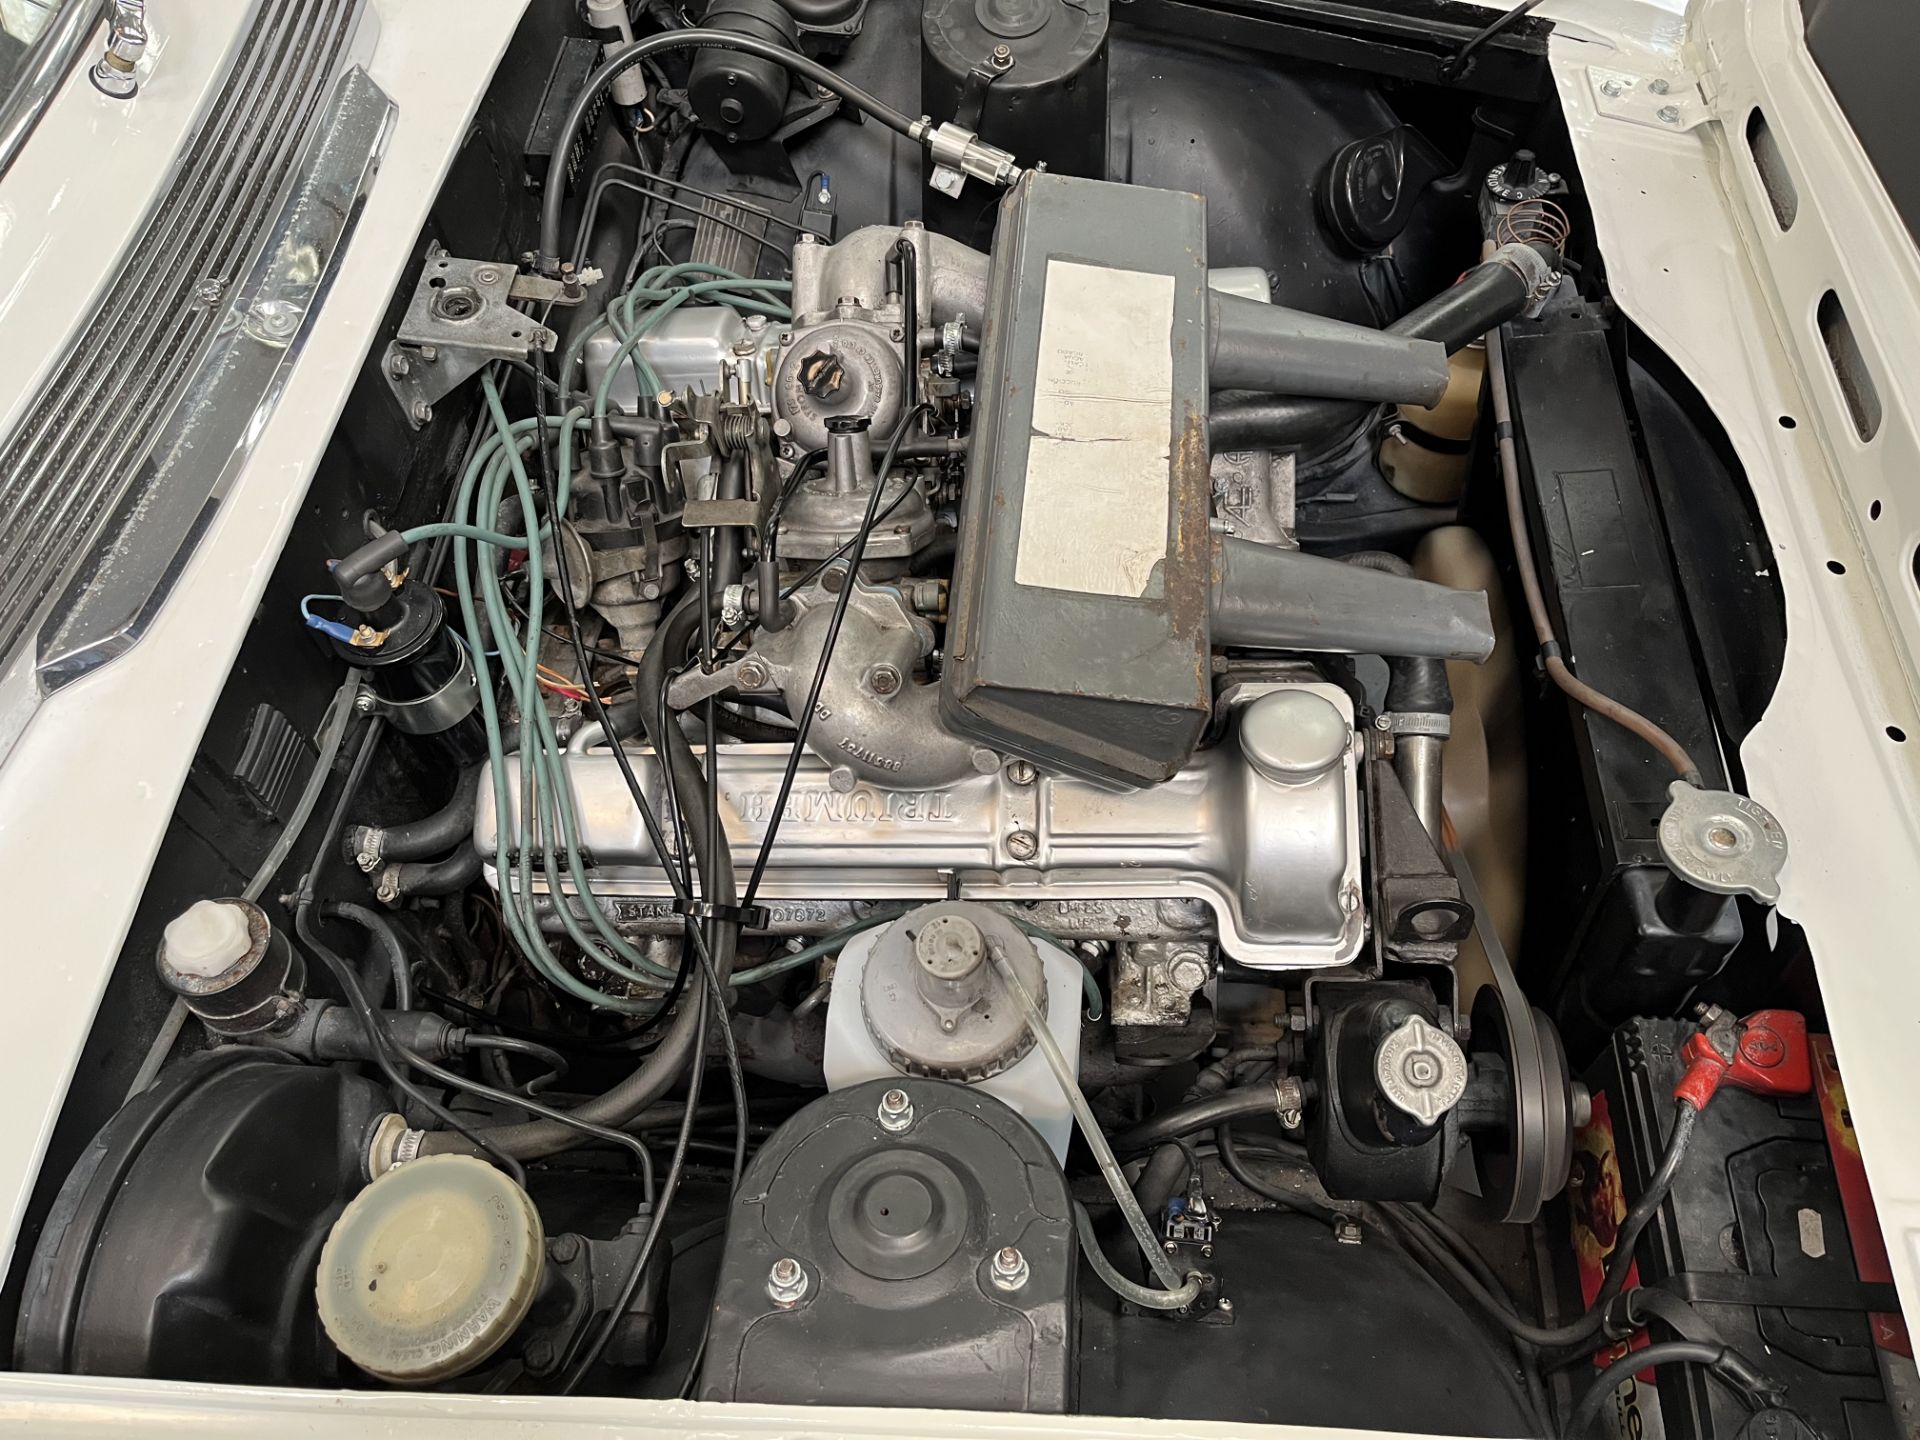 1972 Triumph Stag Manual - 2997cc - Image 18 of 27